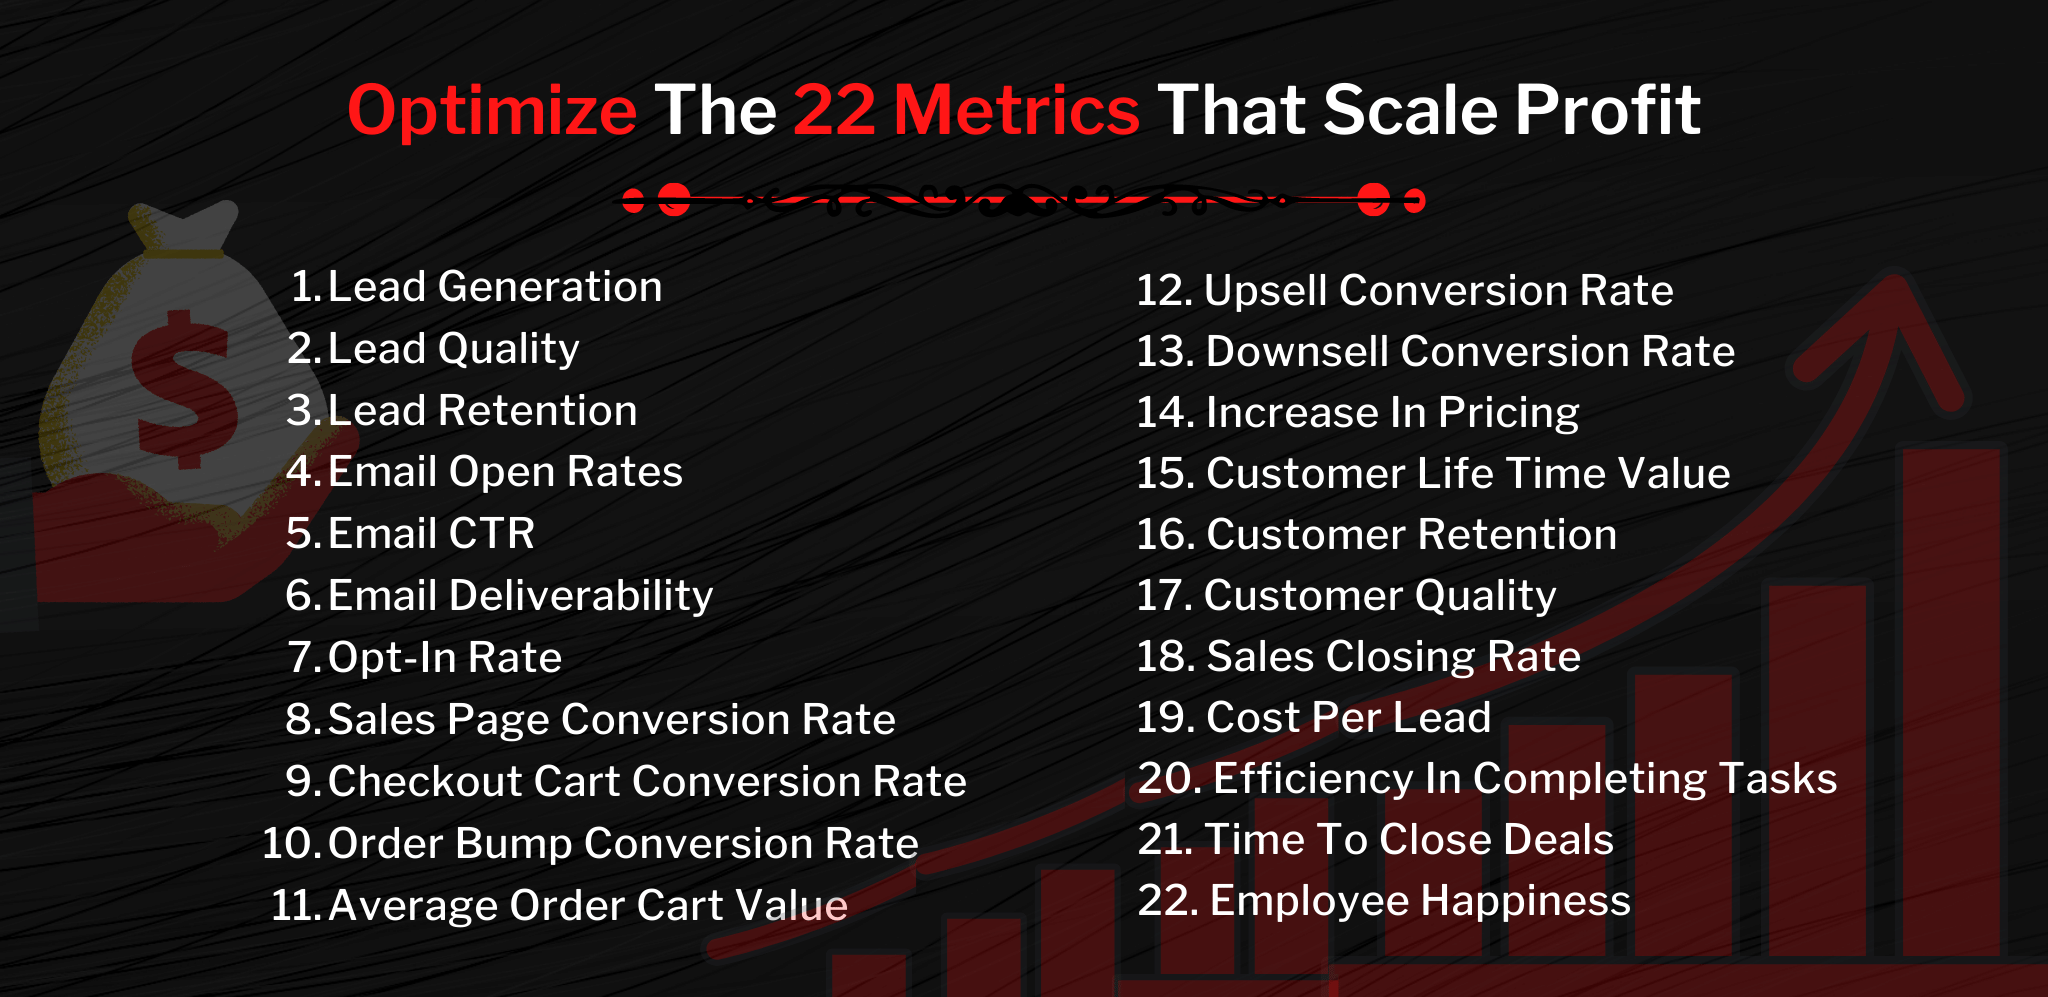 Optimize 22 Metrics That Scale Profit